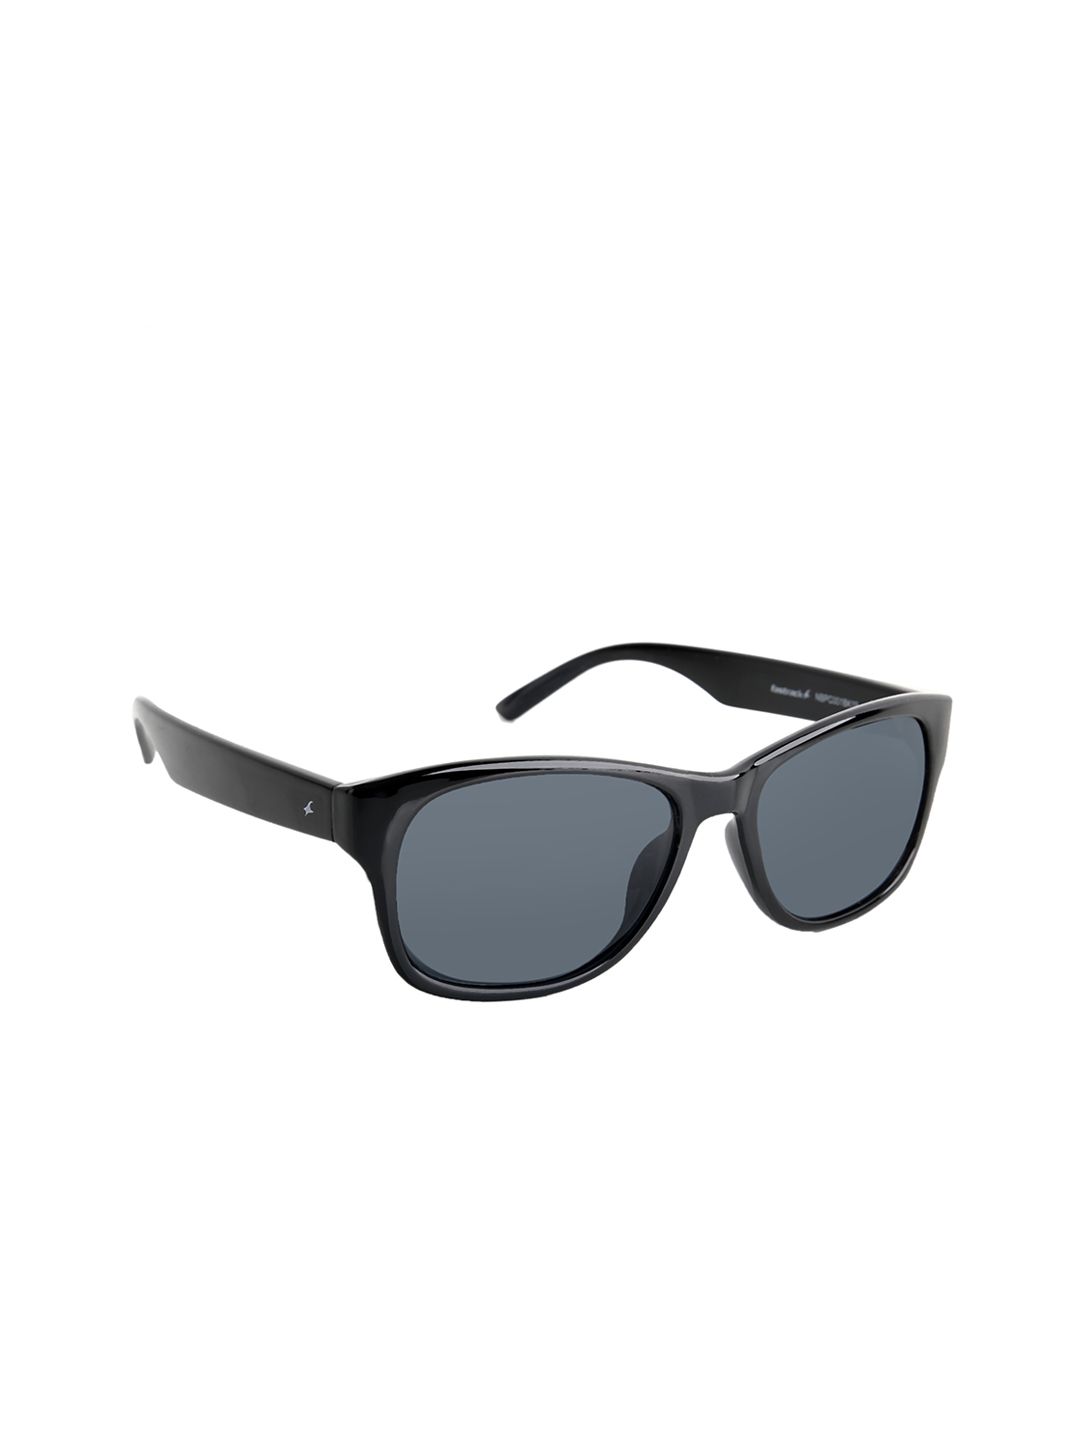 Fastrack Unisex UV Protected Lens Wayfarer Sunglasses PC001BK19 Price in India